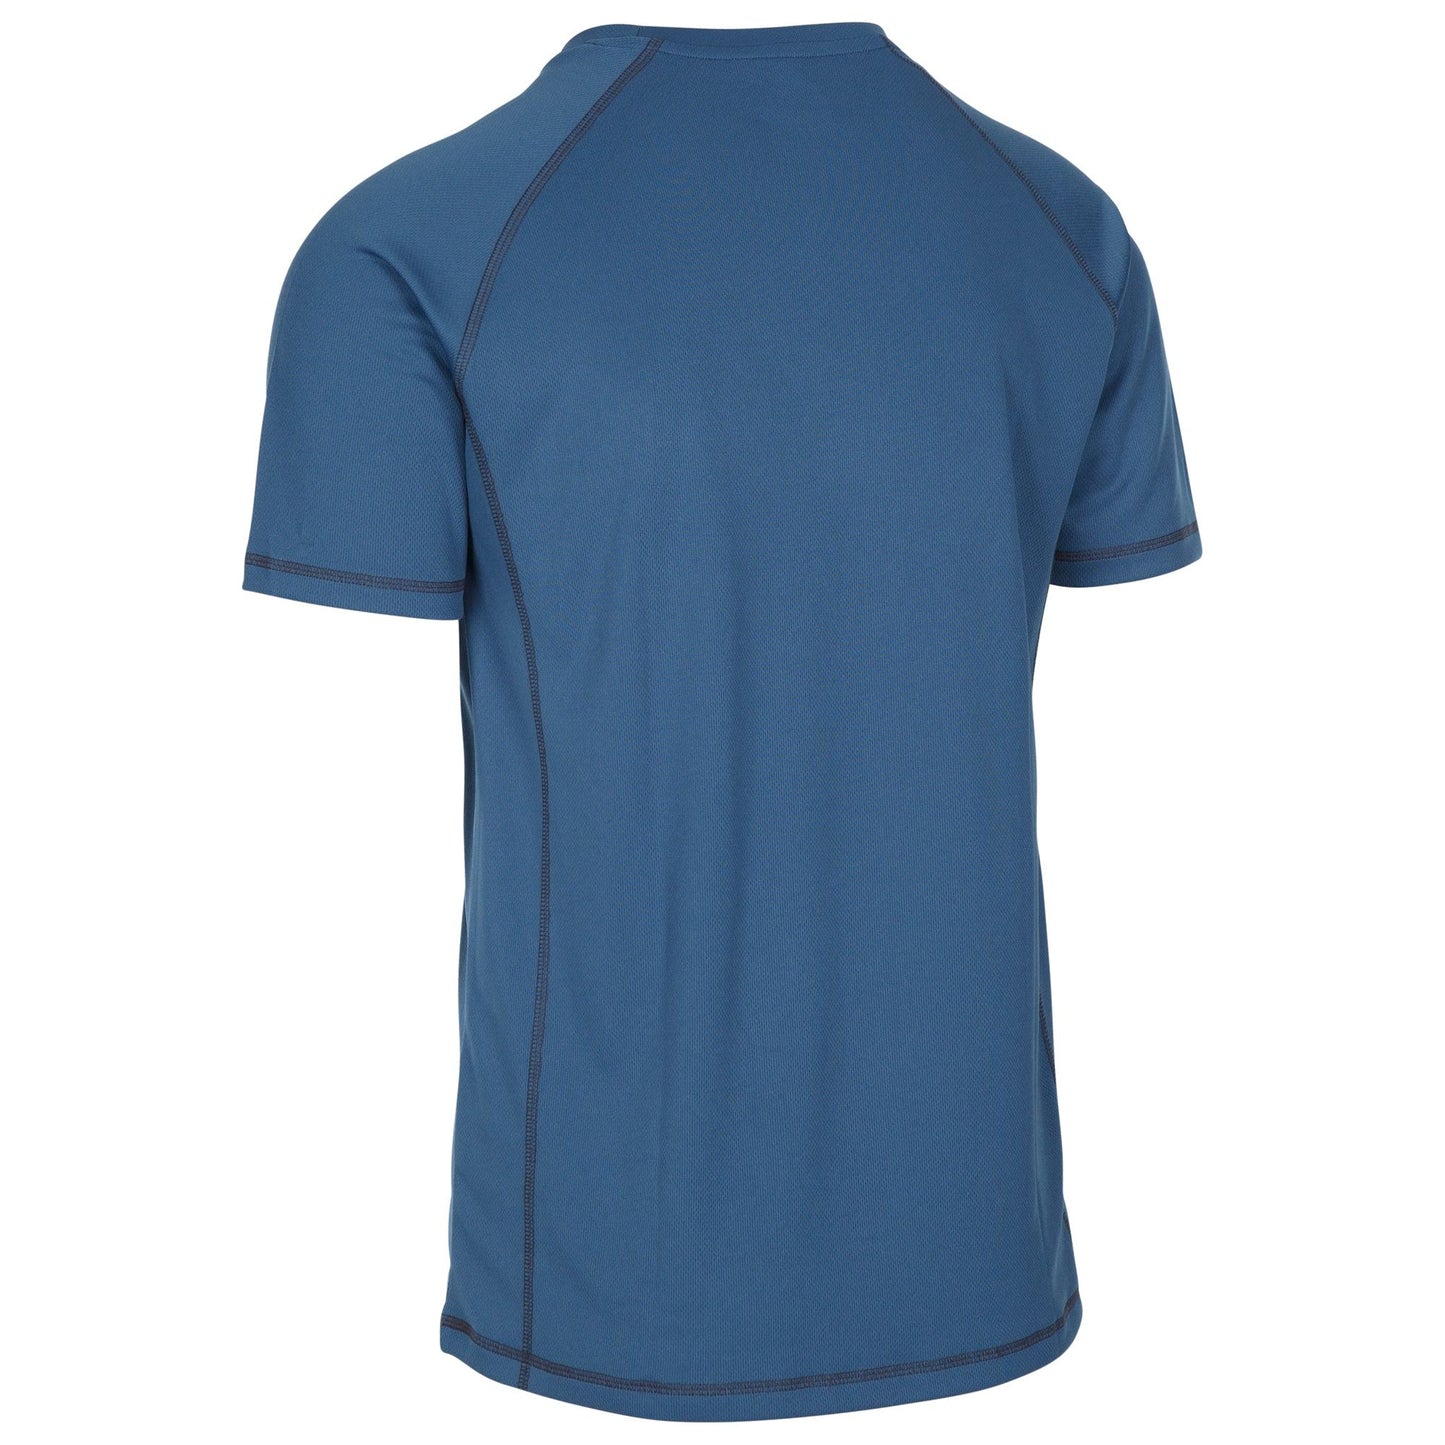 Albert Men's Quick Dry Active T-Shirt in Smokey Blue